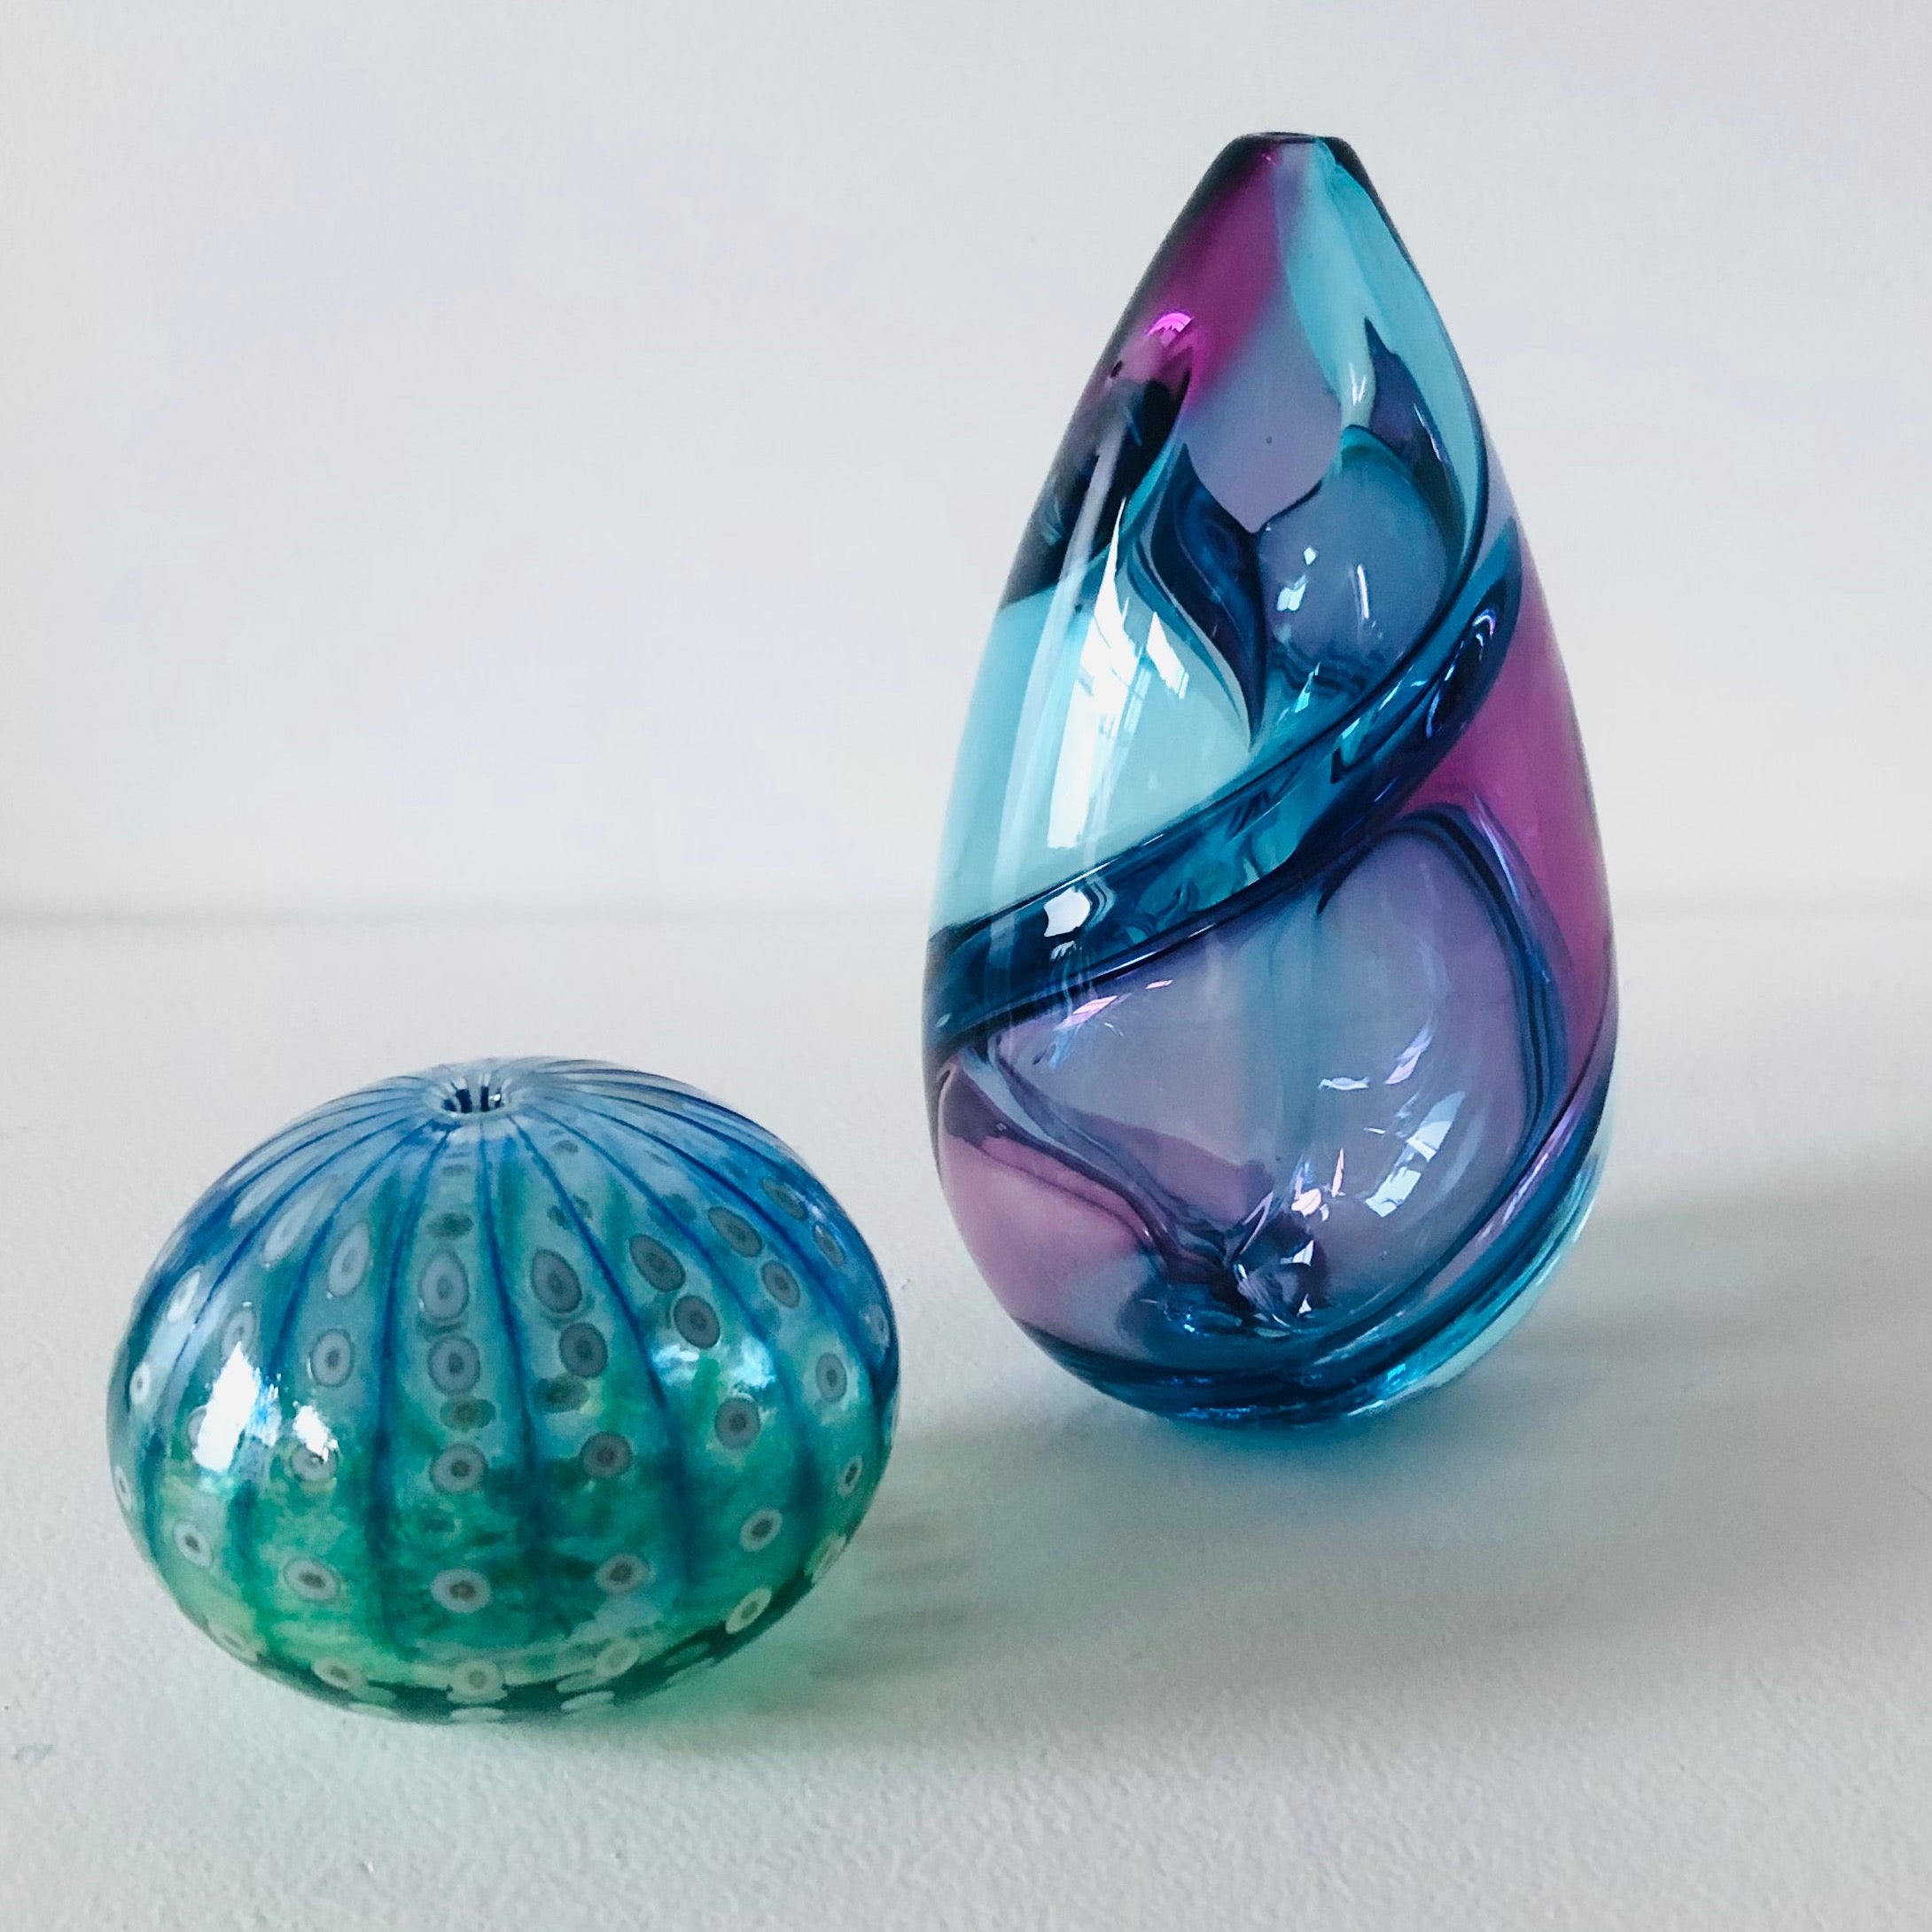 Two glass artworks, one shaped like a kina and the other egg-shaped